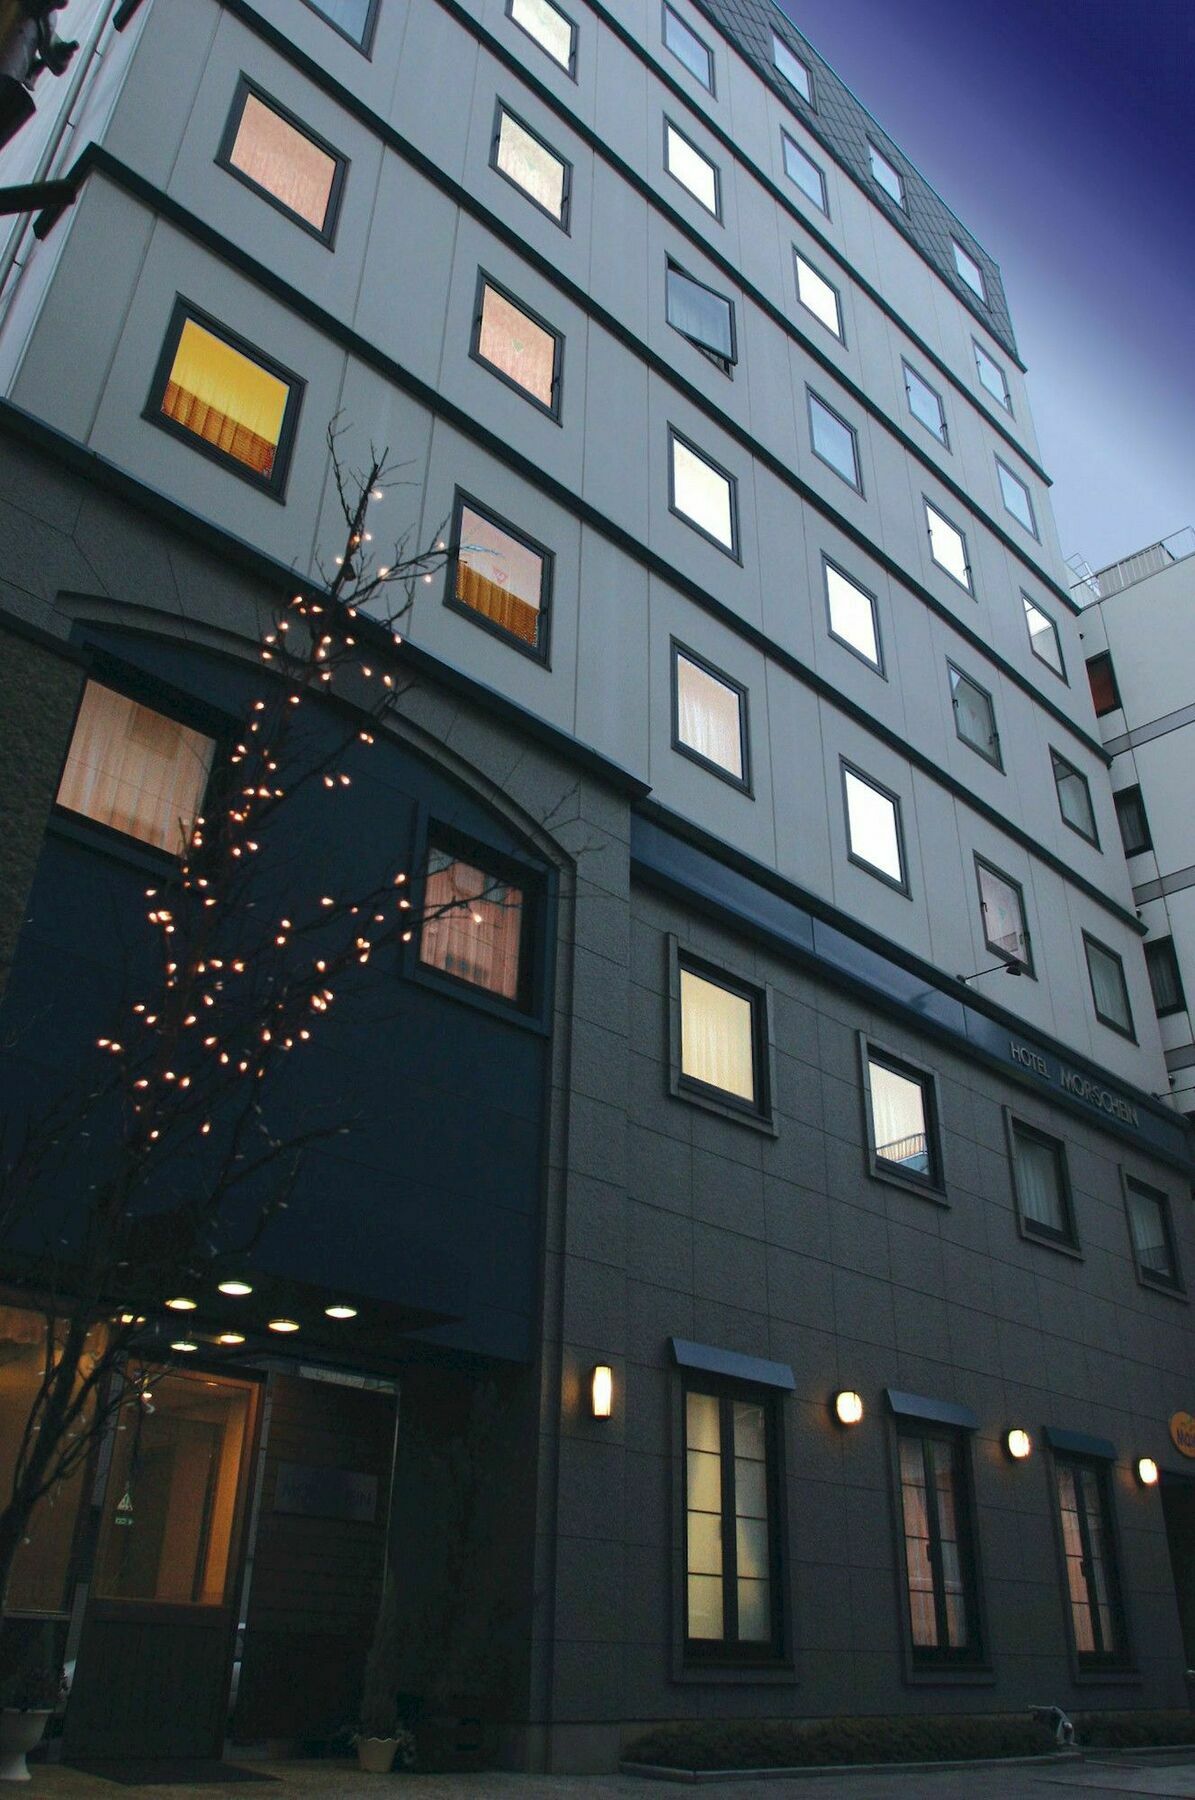 Hotel Morschein Macumoto Exteriér fotografie